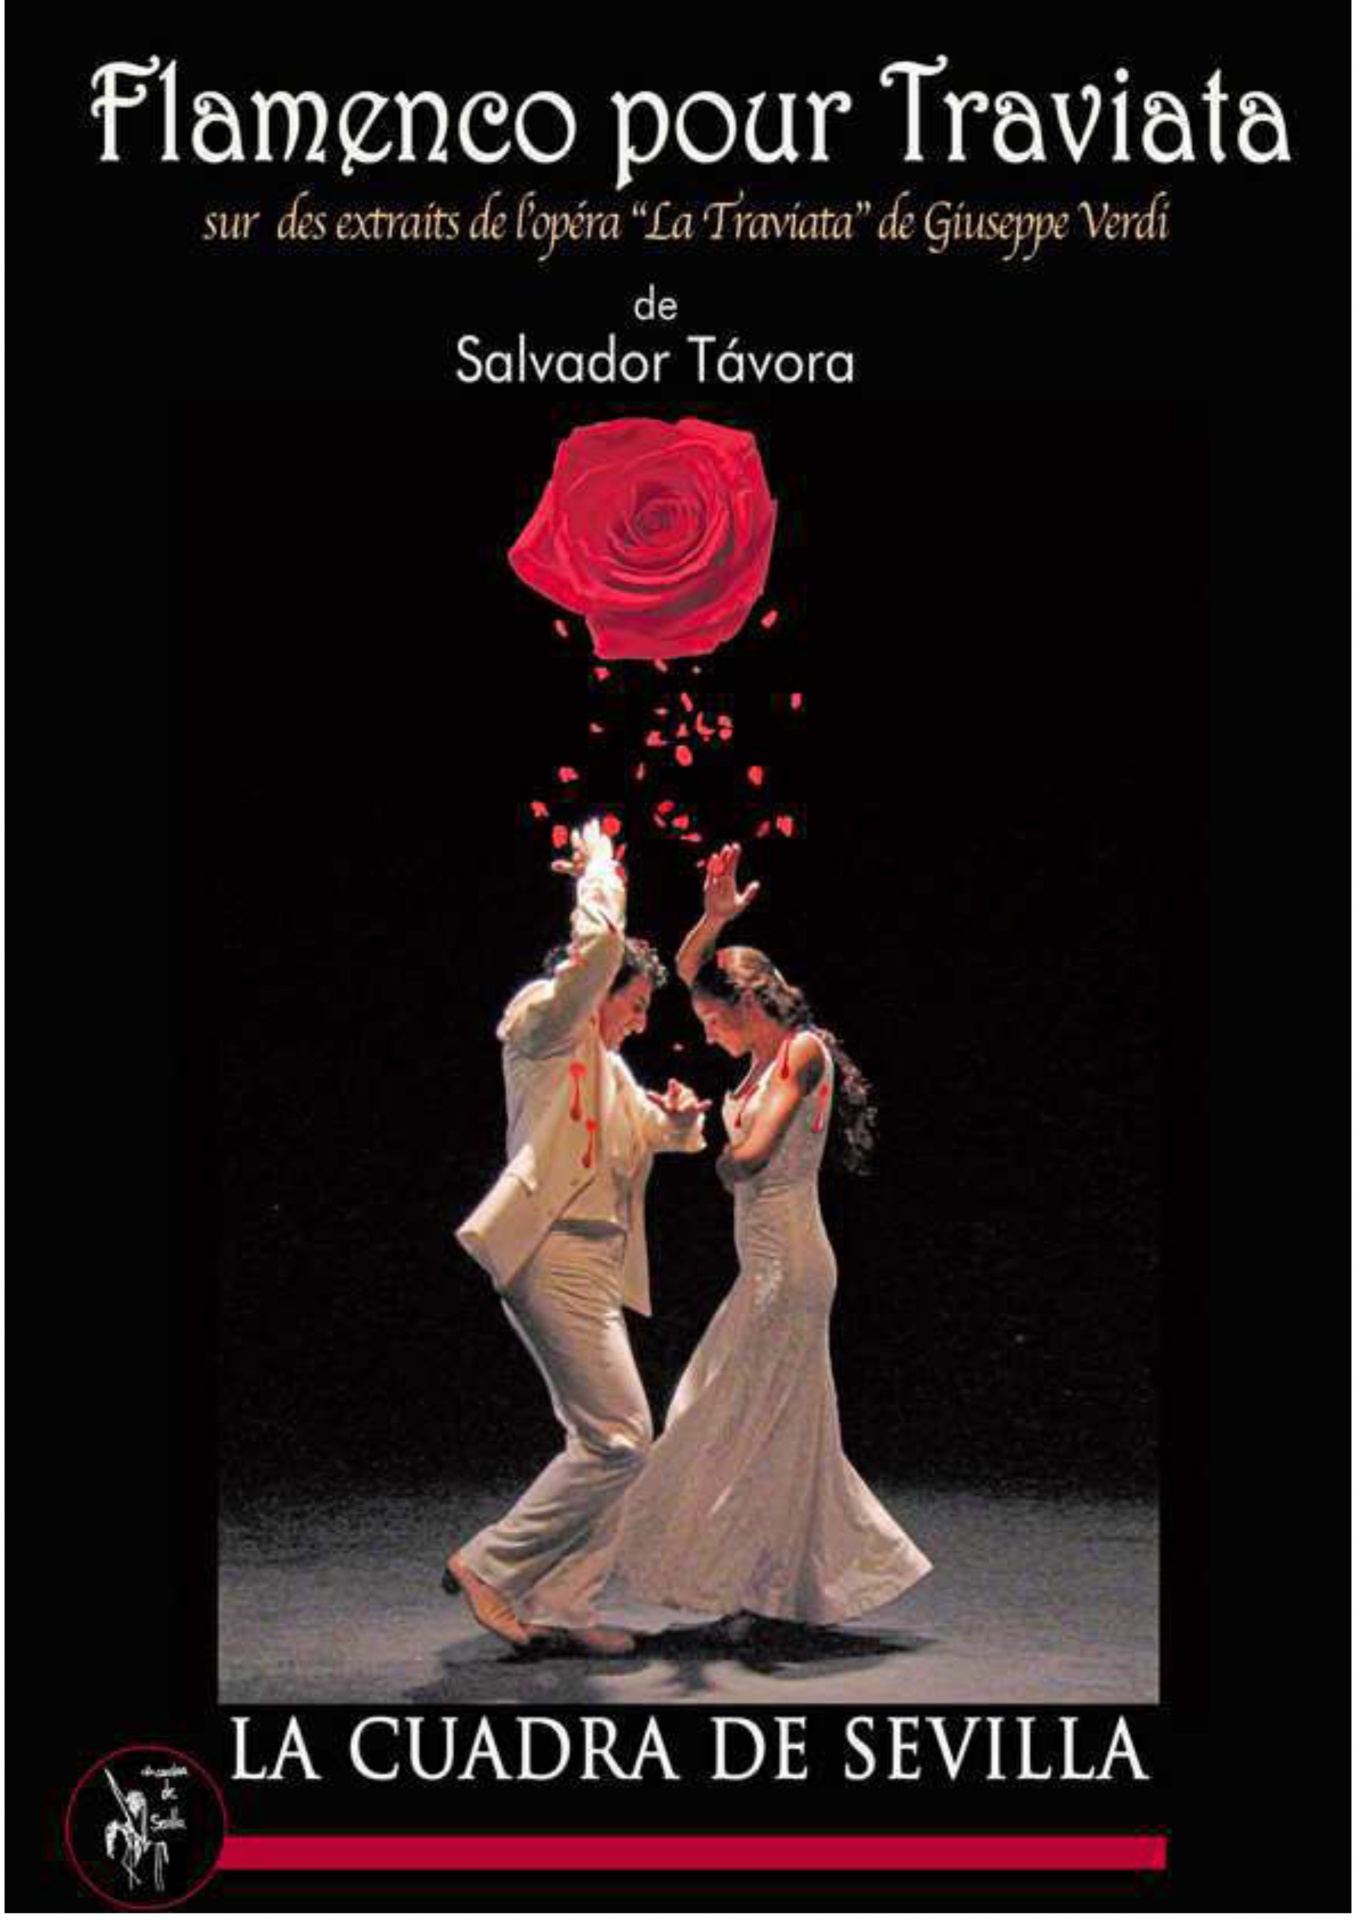 Flamenco pour Traviata sur des extraits de l´opéra La Traviata de Giuseppe Verdi de Salvador Tavora. La Cuadra de Sevilla